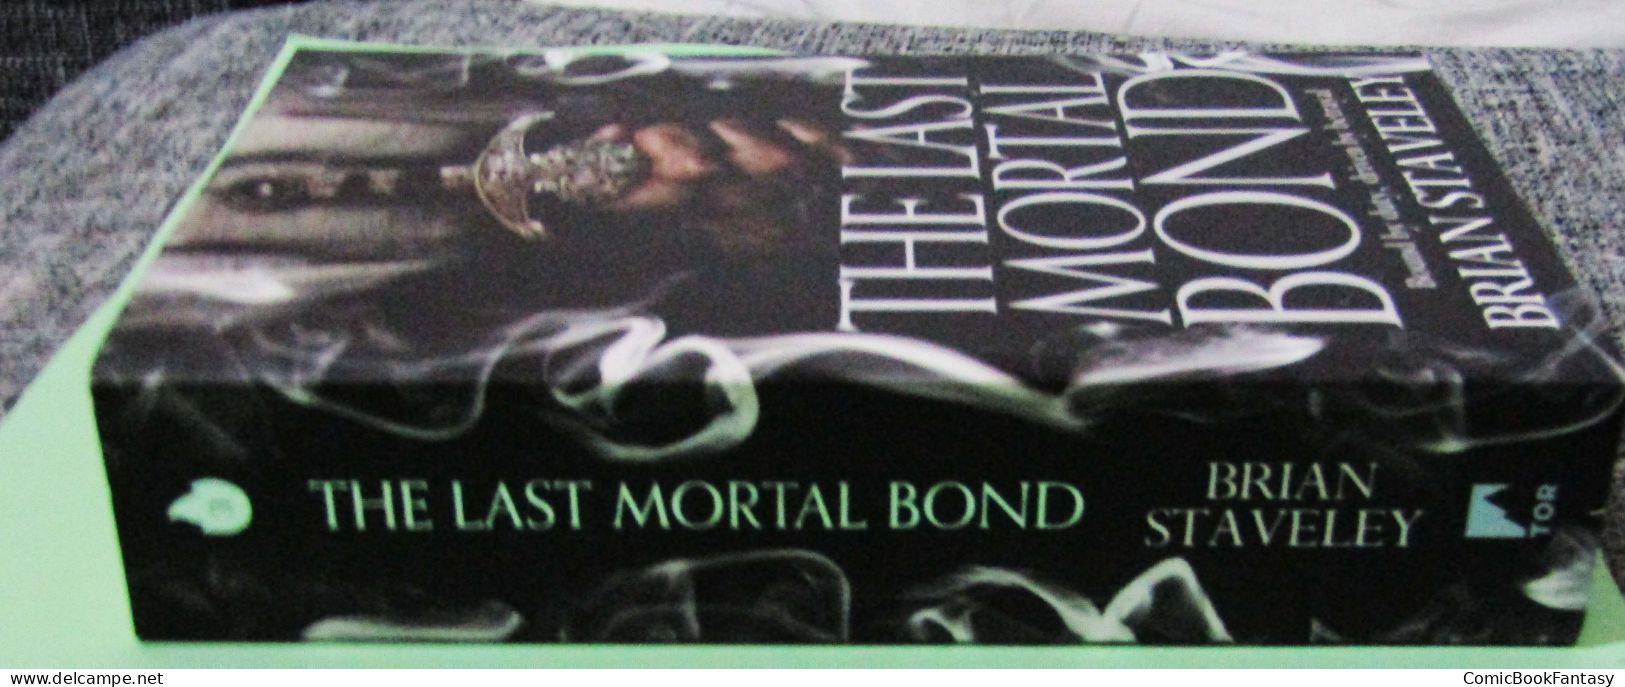 The Last Mortal Bond By Brian Staveley (Paperback, 2016) New (read Description) - Action/ Adventure